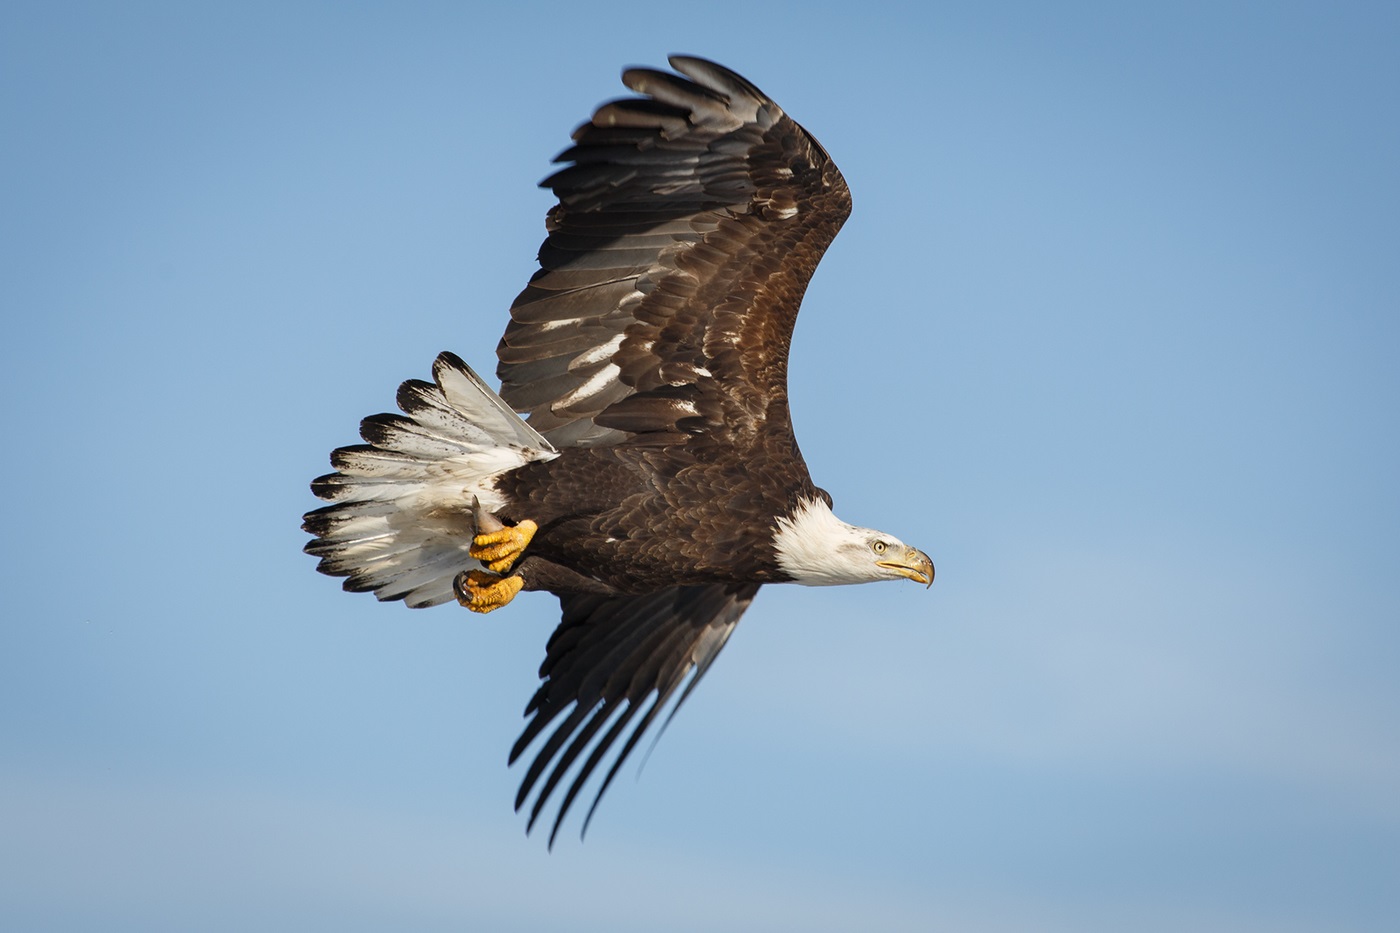 Bald eagle on the hunt